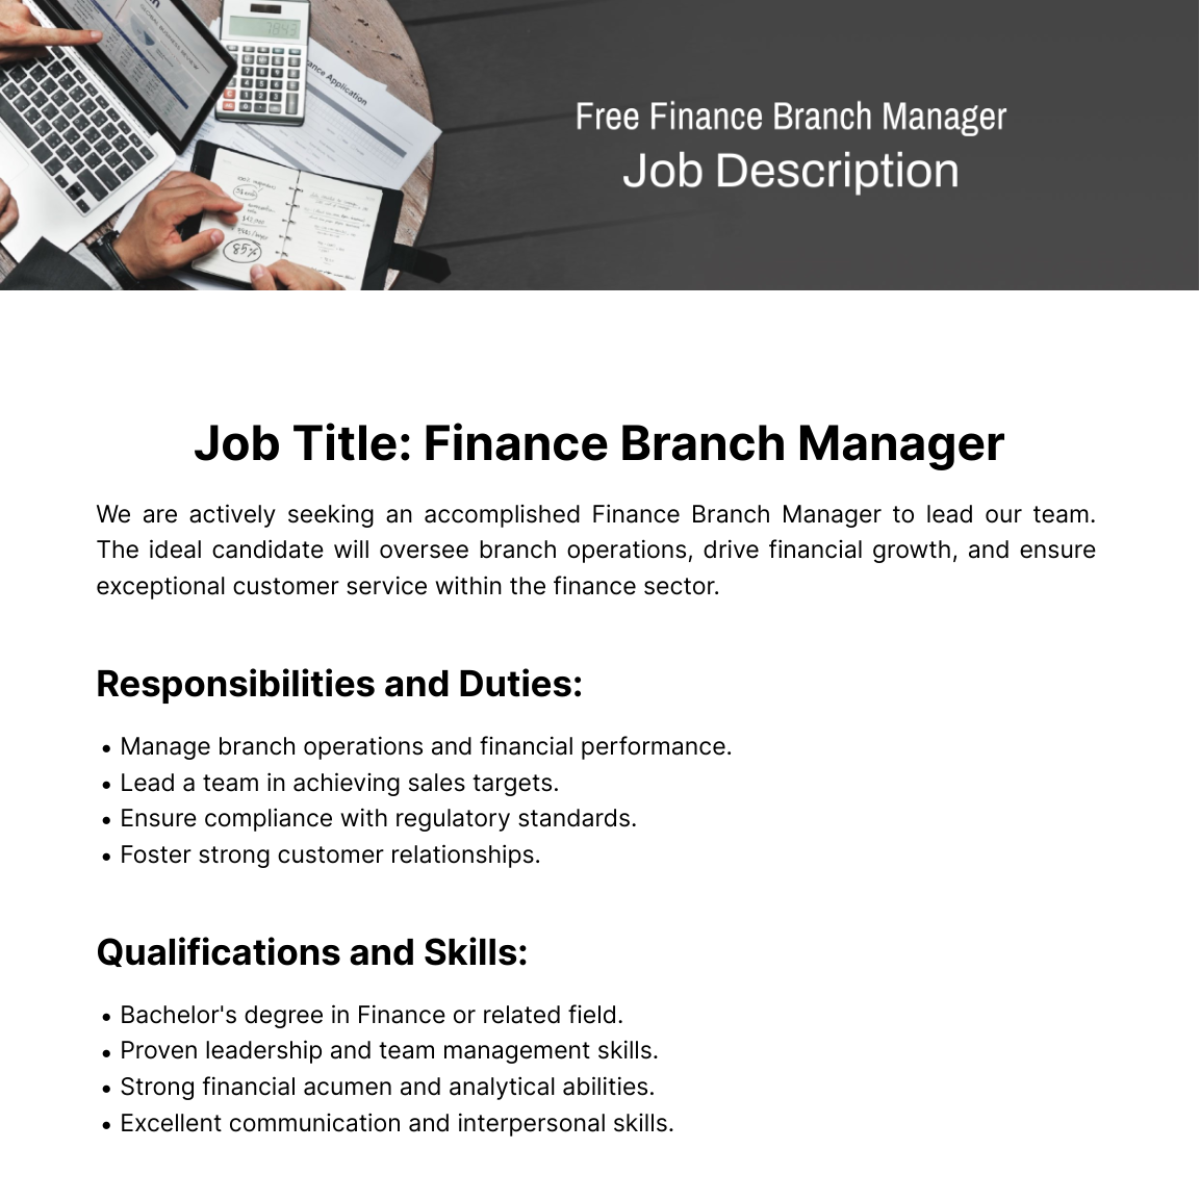 Finance Branch Manager Job Description Template